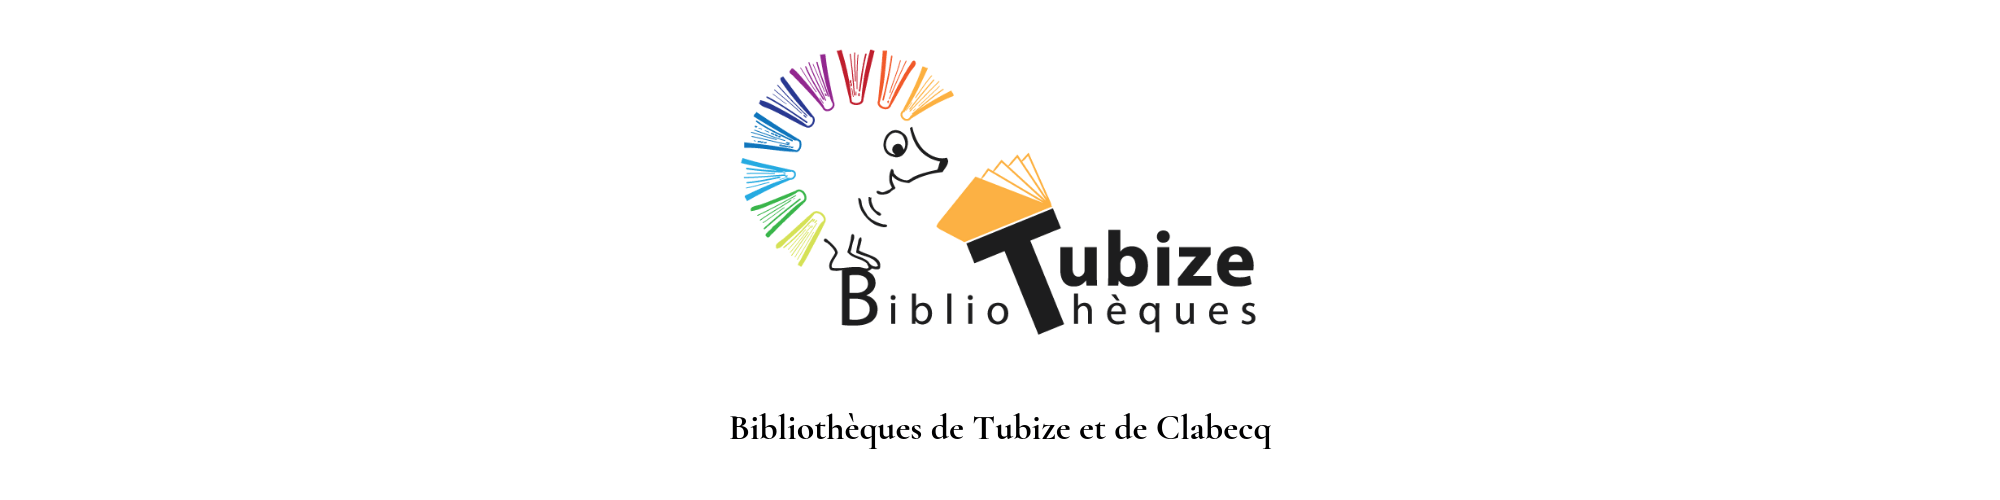 (c) Tubize-tuclasakoi.be